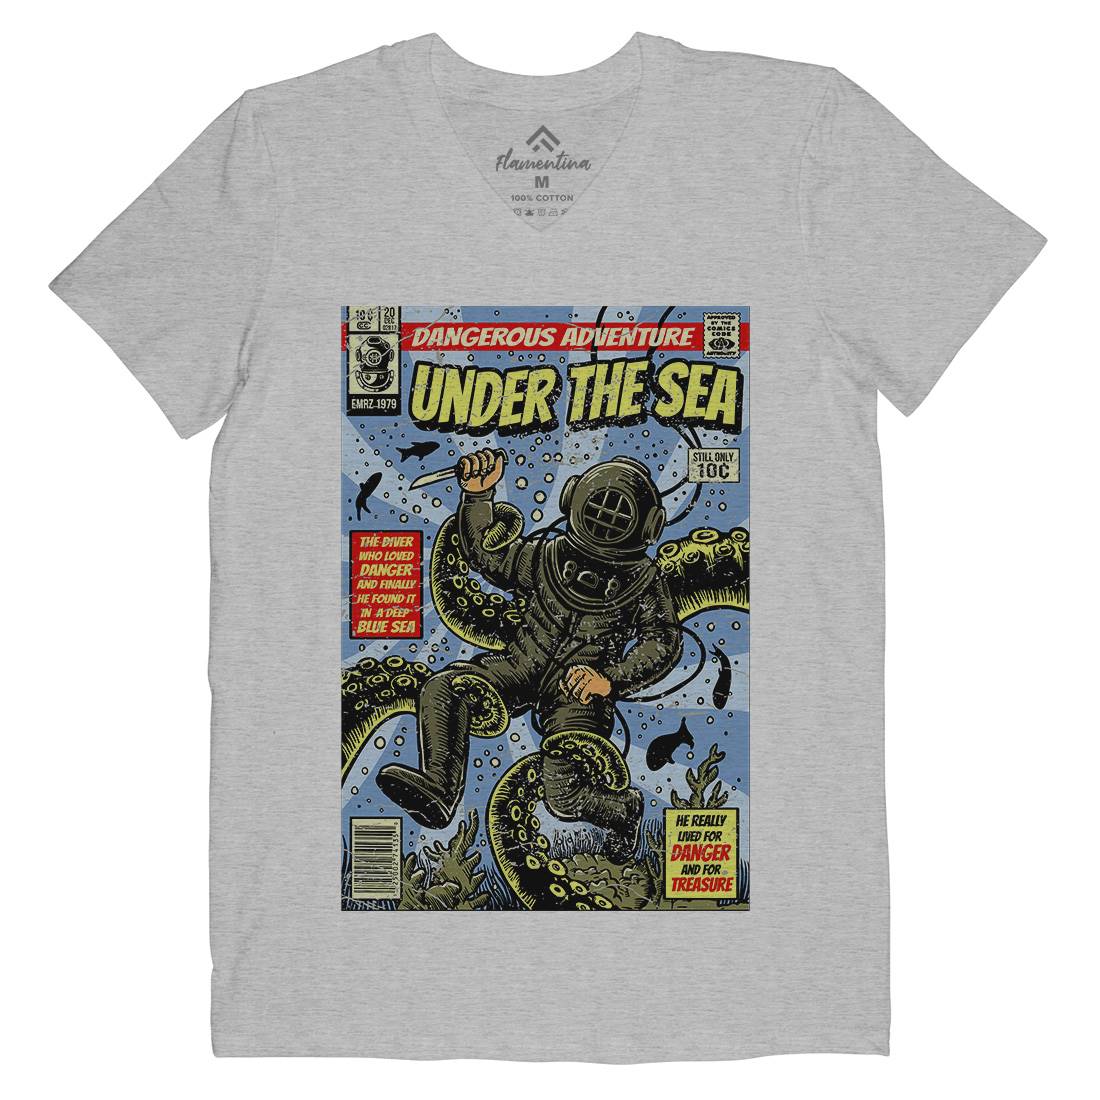 Under The Sea Mens Organic V-Neck T-Shirt Navy A585